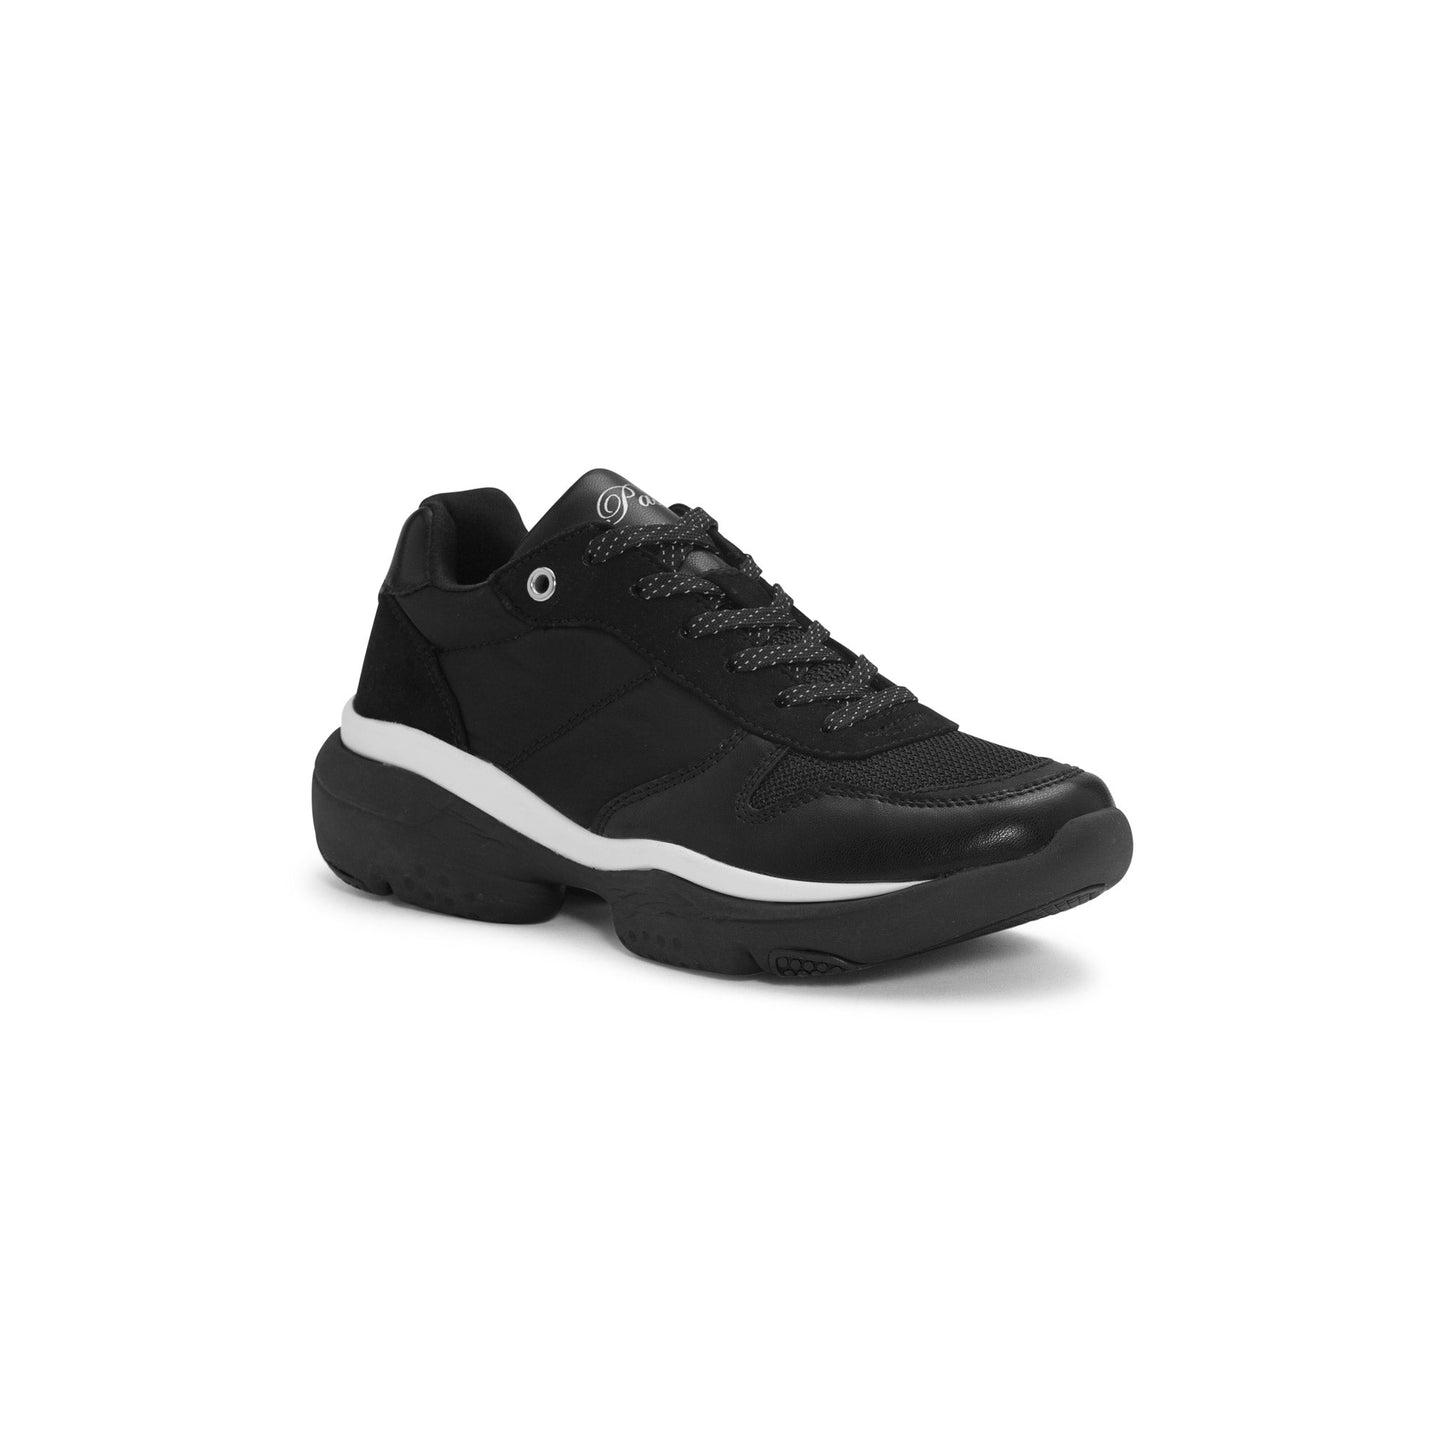 Pastry Adult Women's Carla Sneaker in Black/White in 3 quarter view